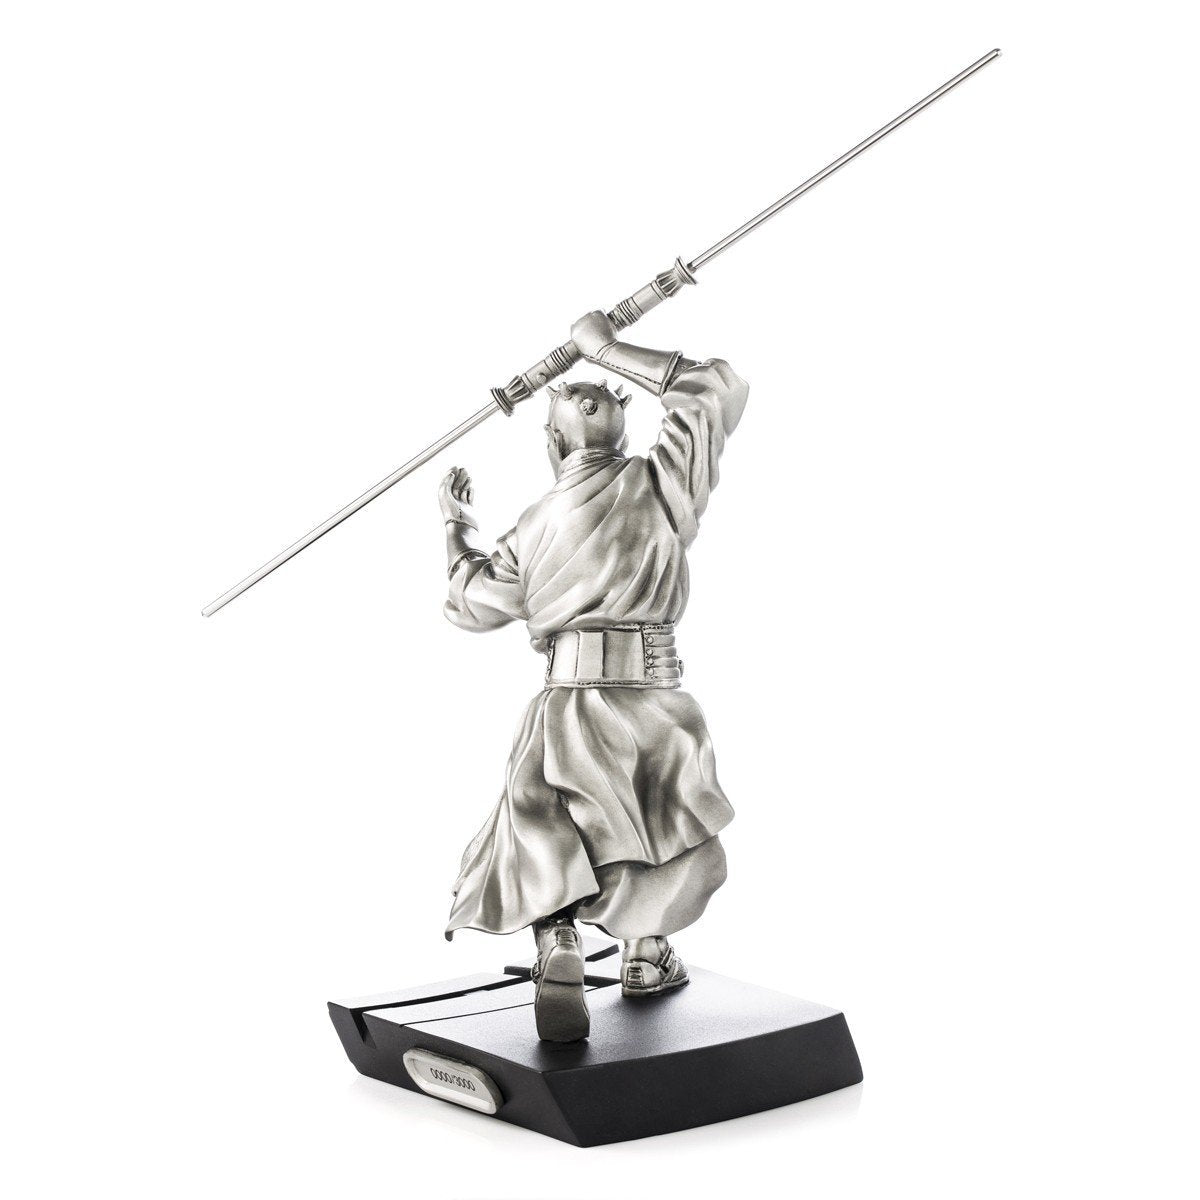 Star Wars Darth Maul Limited Edition Figurine - Collectible Statue